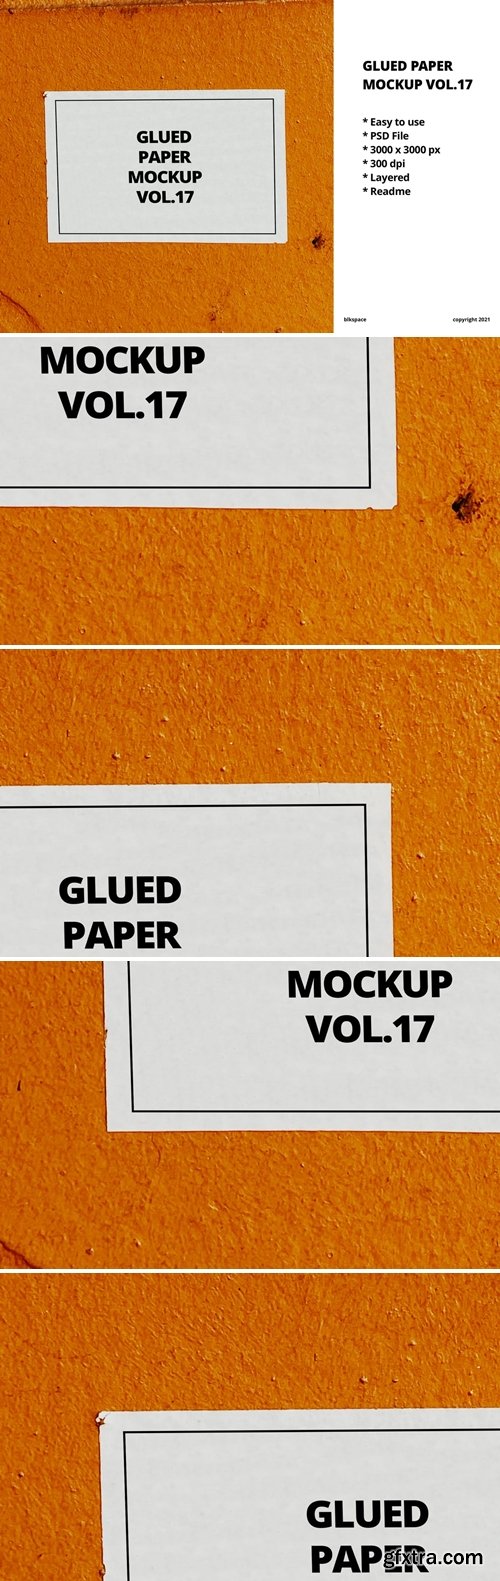 Glued Paper Mockup Vol.17